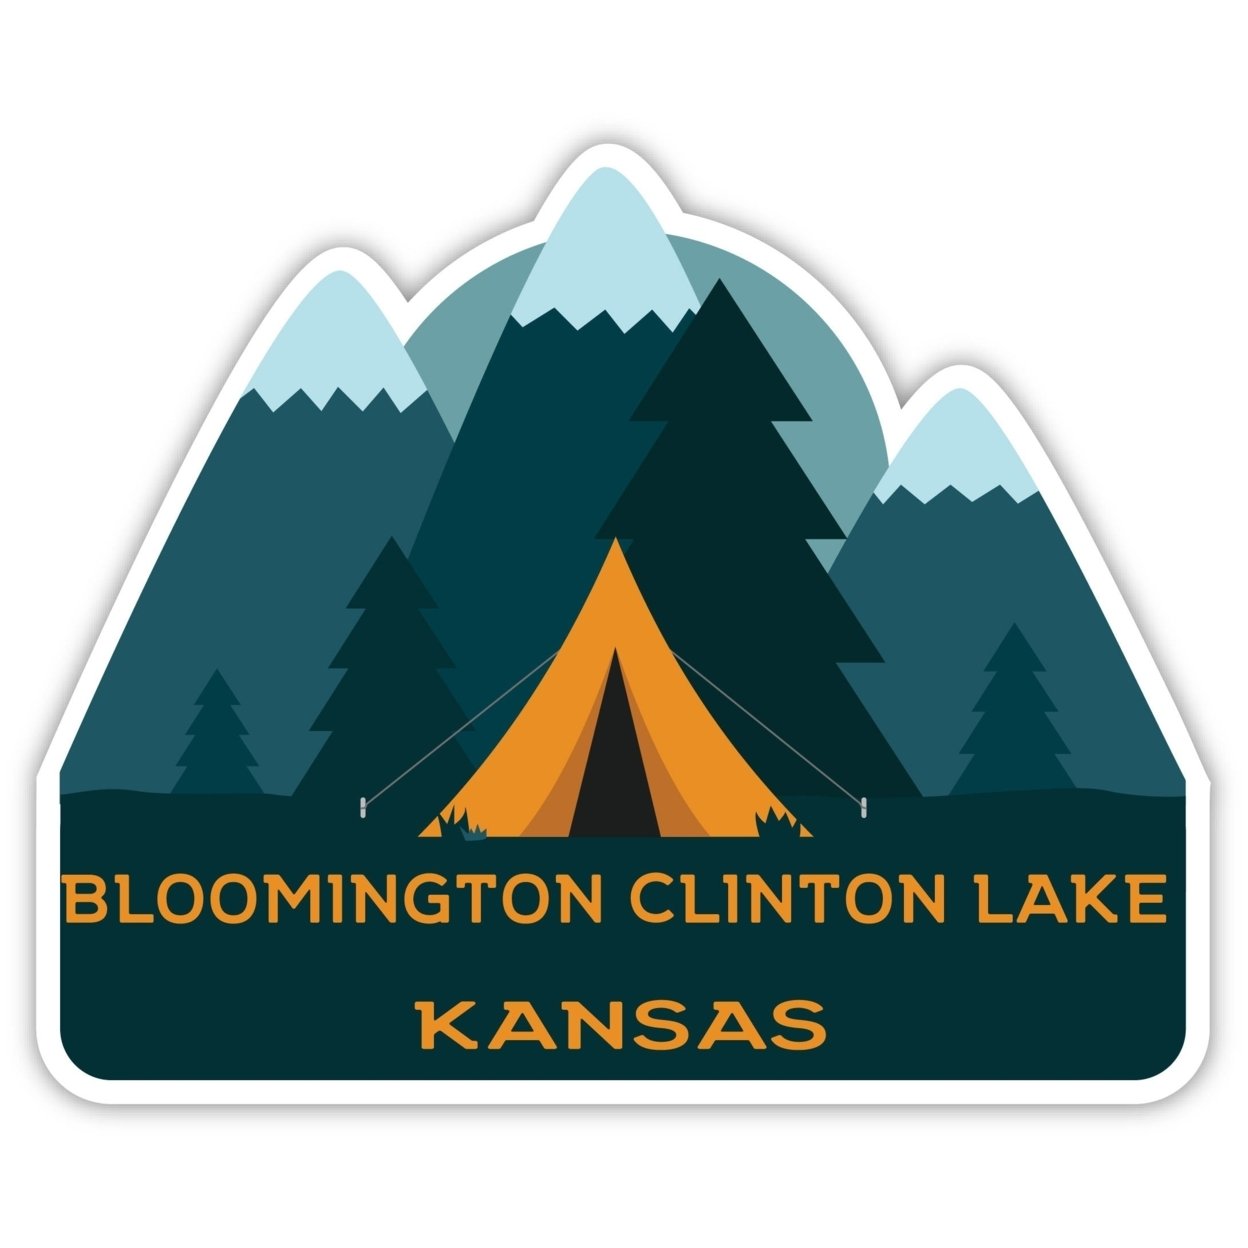 Bloomington Clinton Lake Kansas Souvenir Decorative Stickers (Choose Theme And Size) - 4-Pack, 8-Inch, Tent